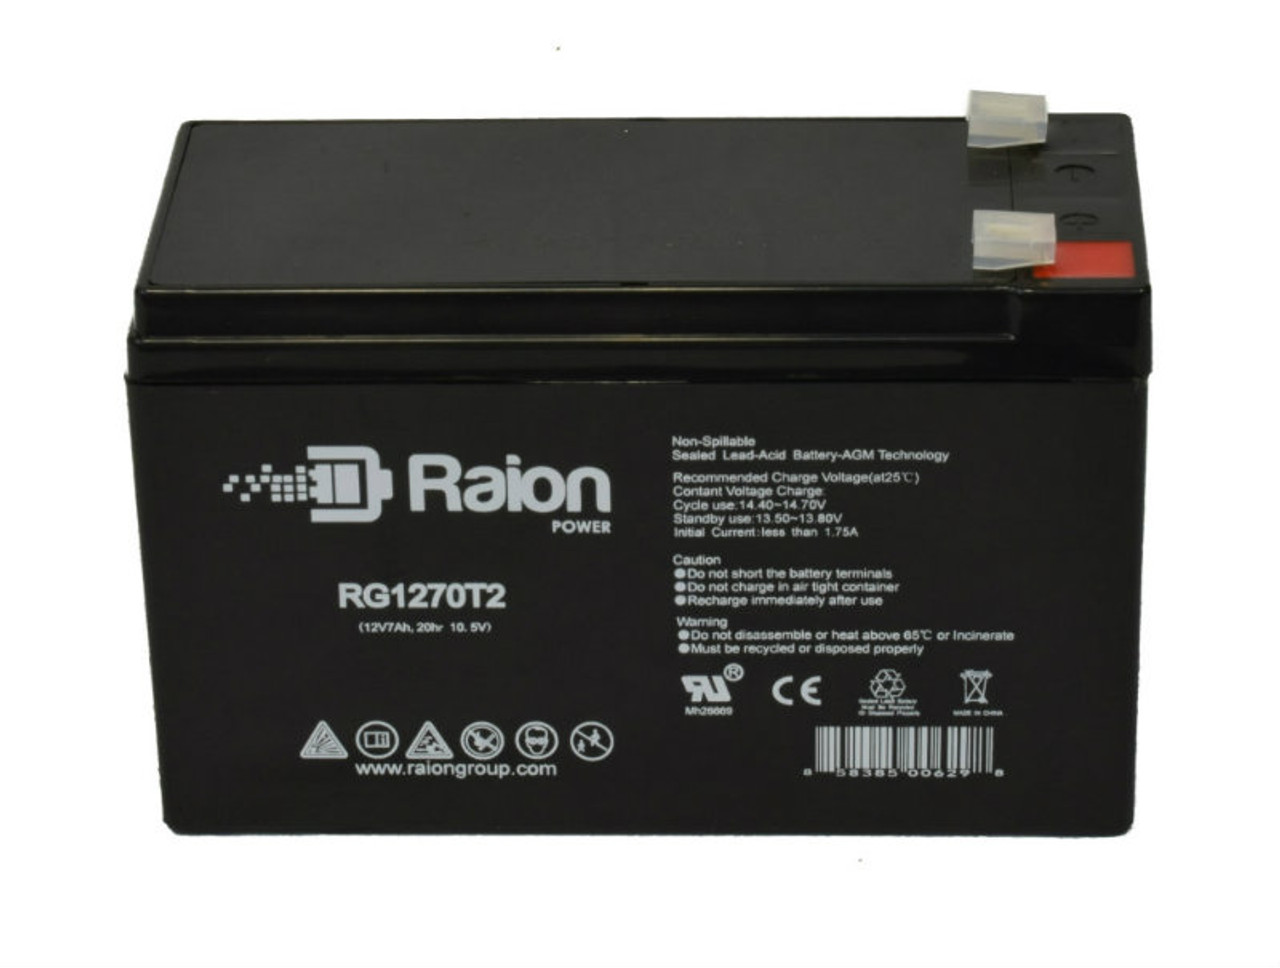 Raion Power RG1270T1 12V 7Ah Lead Acid Battery for Bright Way Group BWG 1270F1